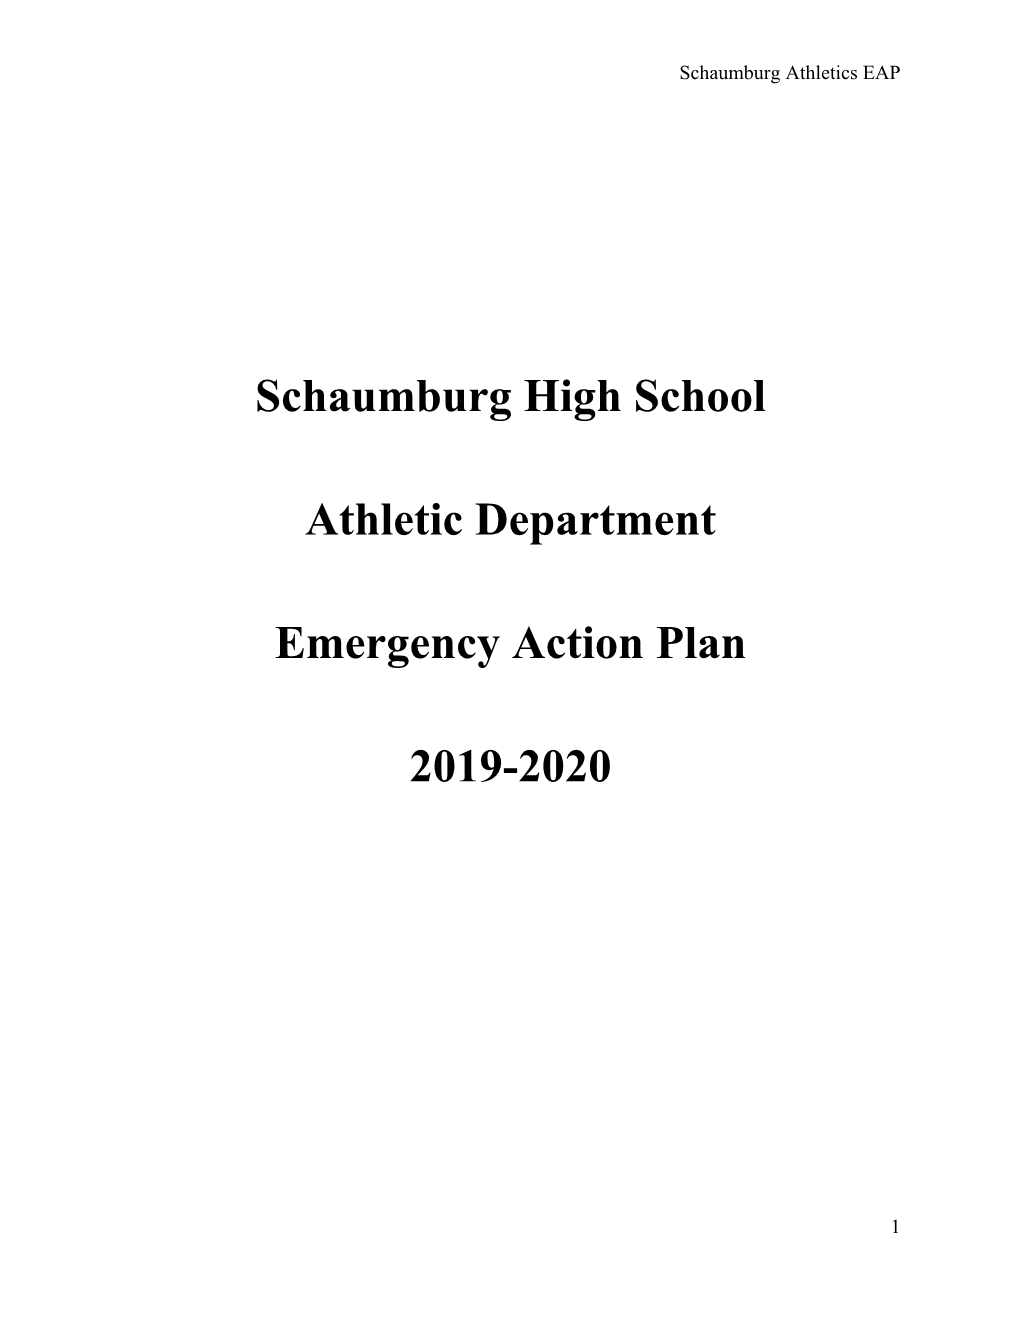 Schaumburg High School Athletic Department Emergency Action Plan